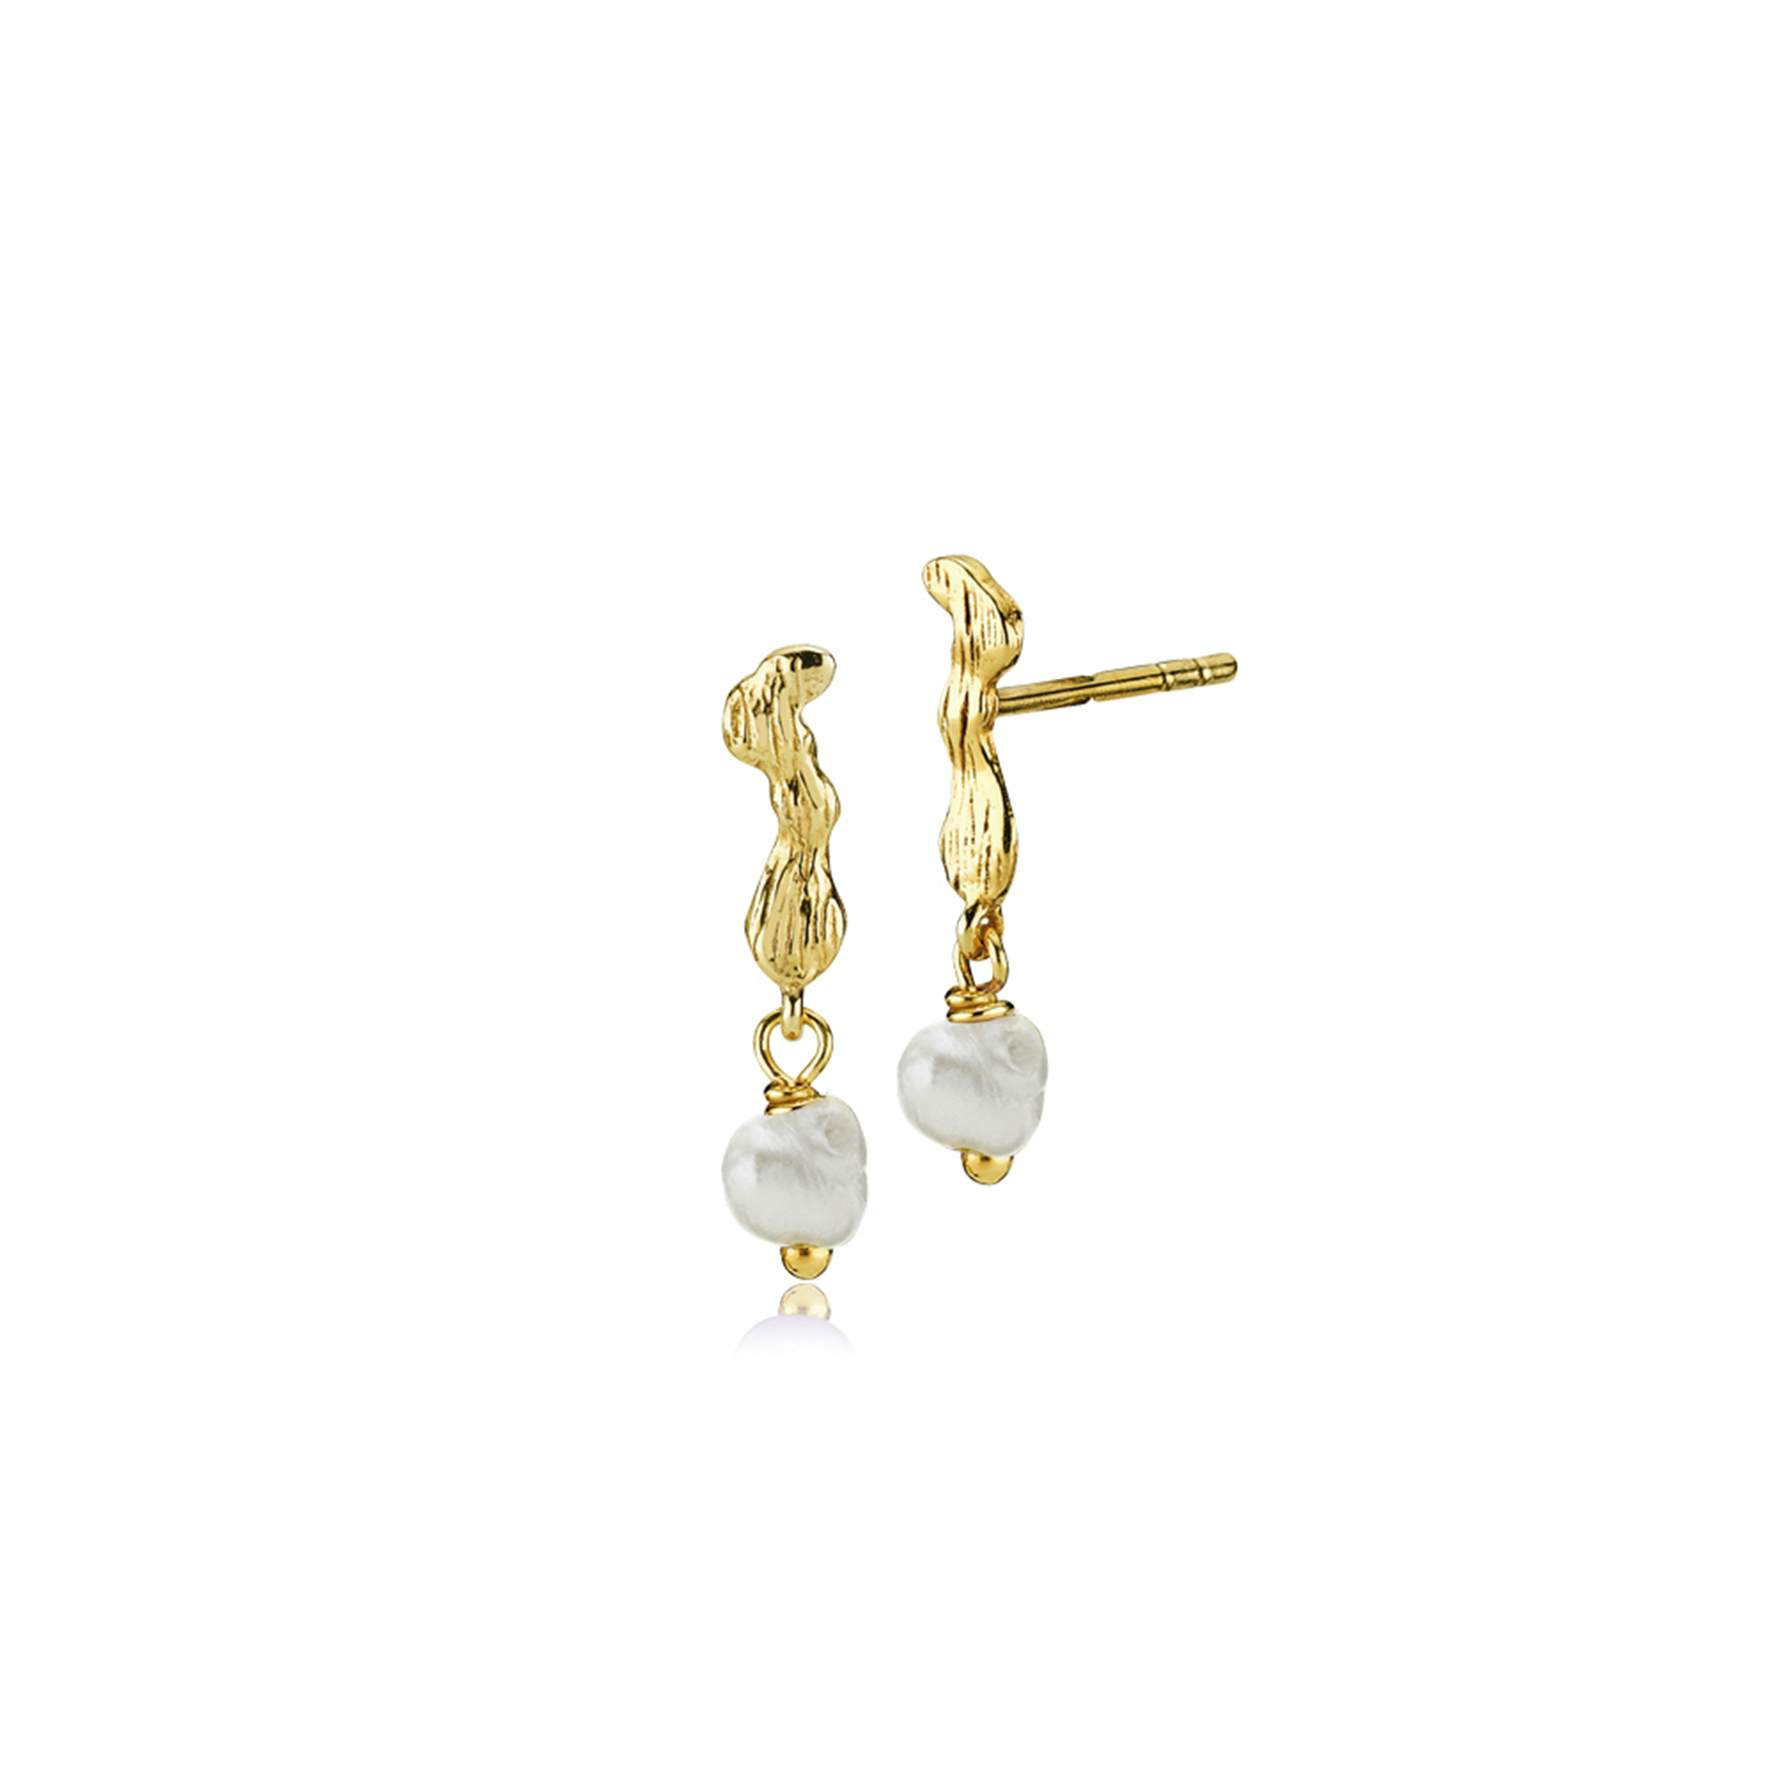 Lærke Bentsen By Sistie Earsticks With Pearls från Sistie i Förgyllt-Silver Sterling 925|Freshwater Pearl